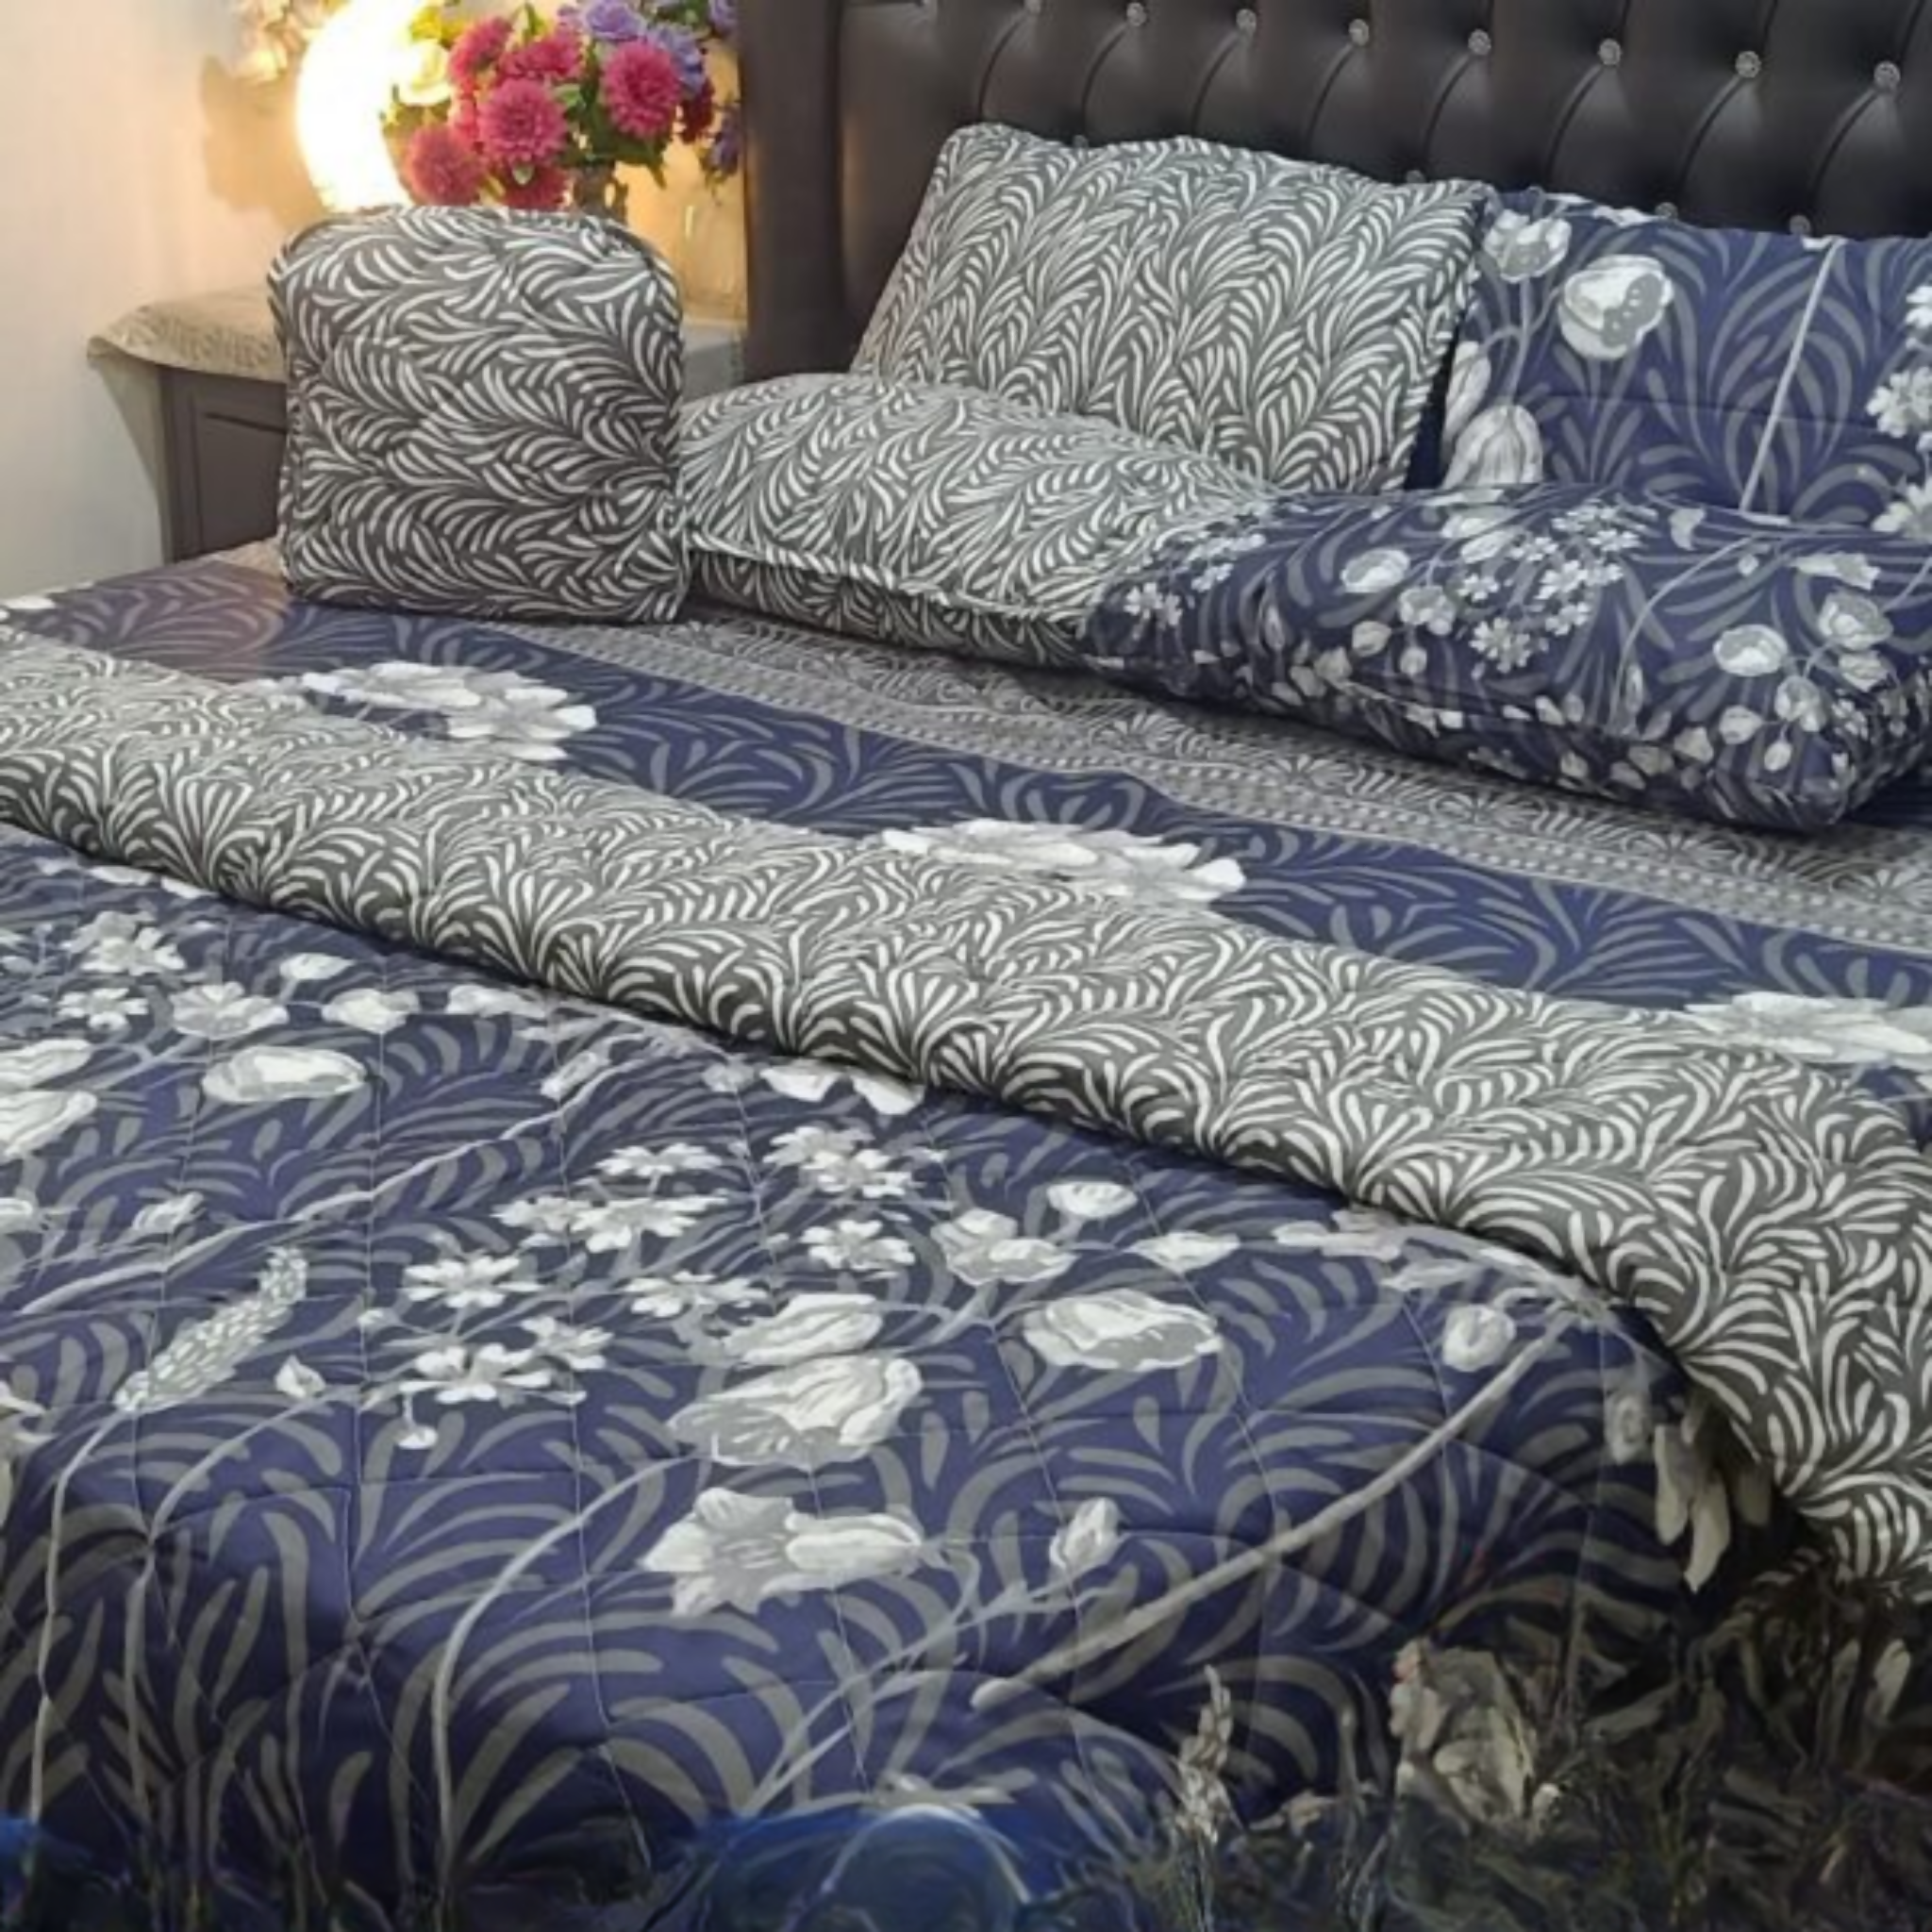 Comforter Set, 7-Piece Printed Cotton, Sleep in Style & Comfort